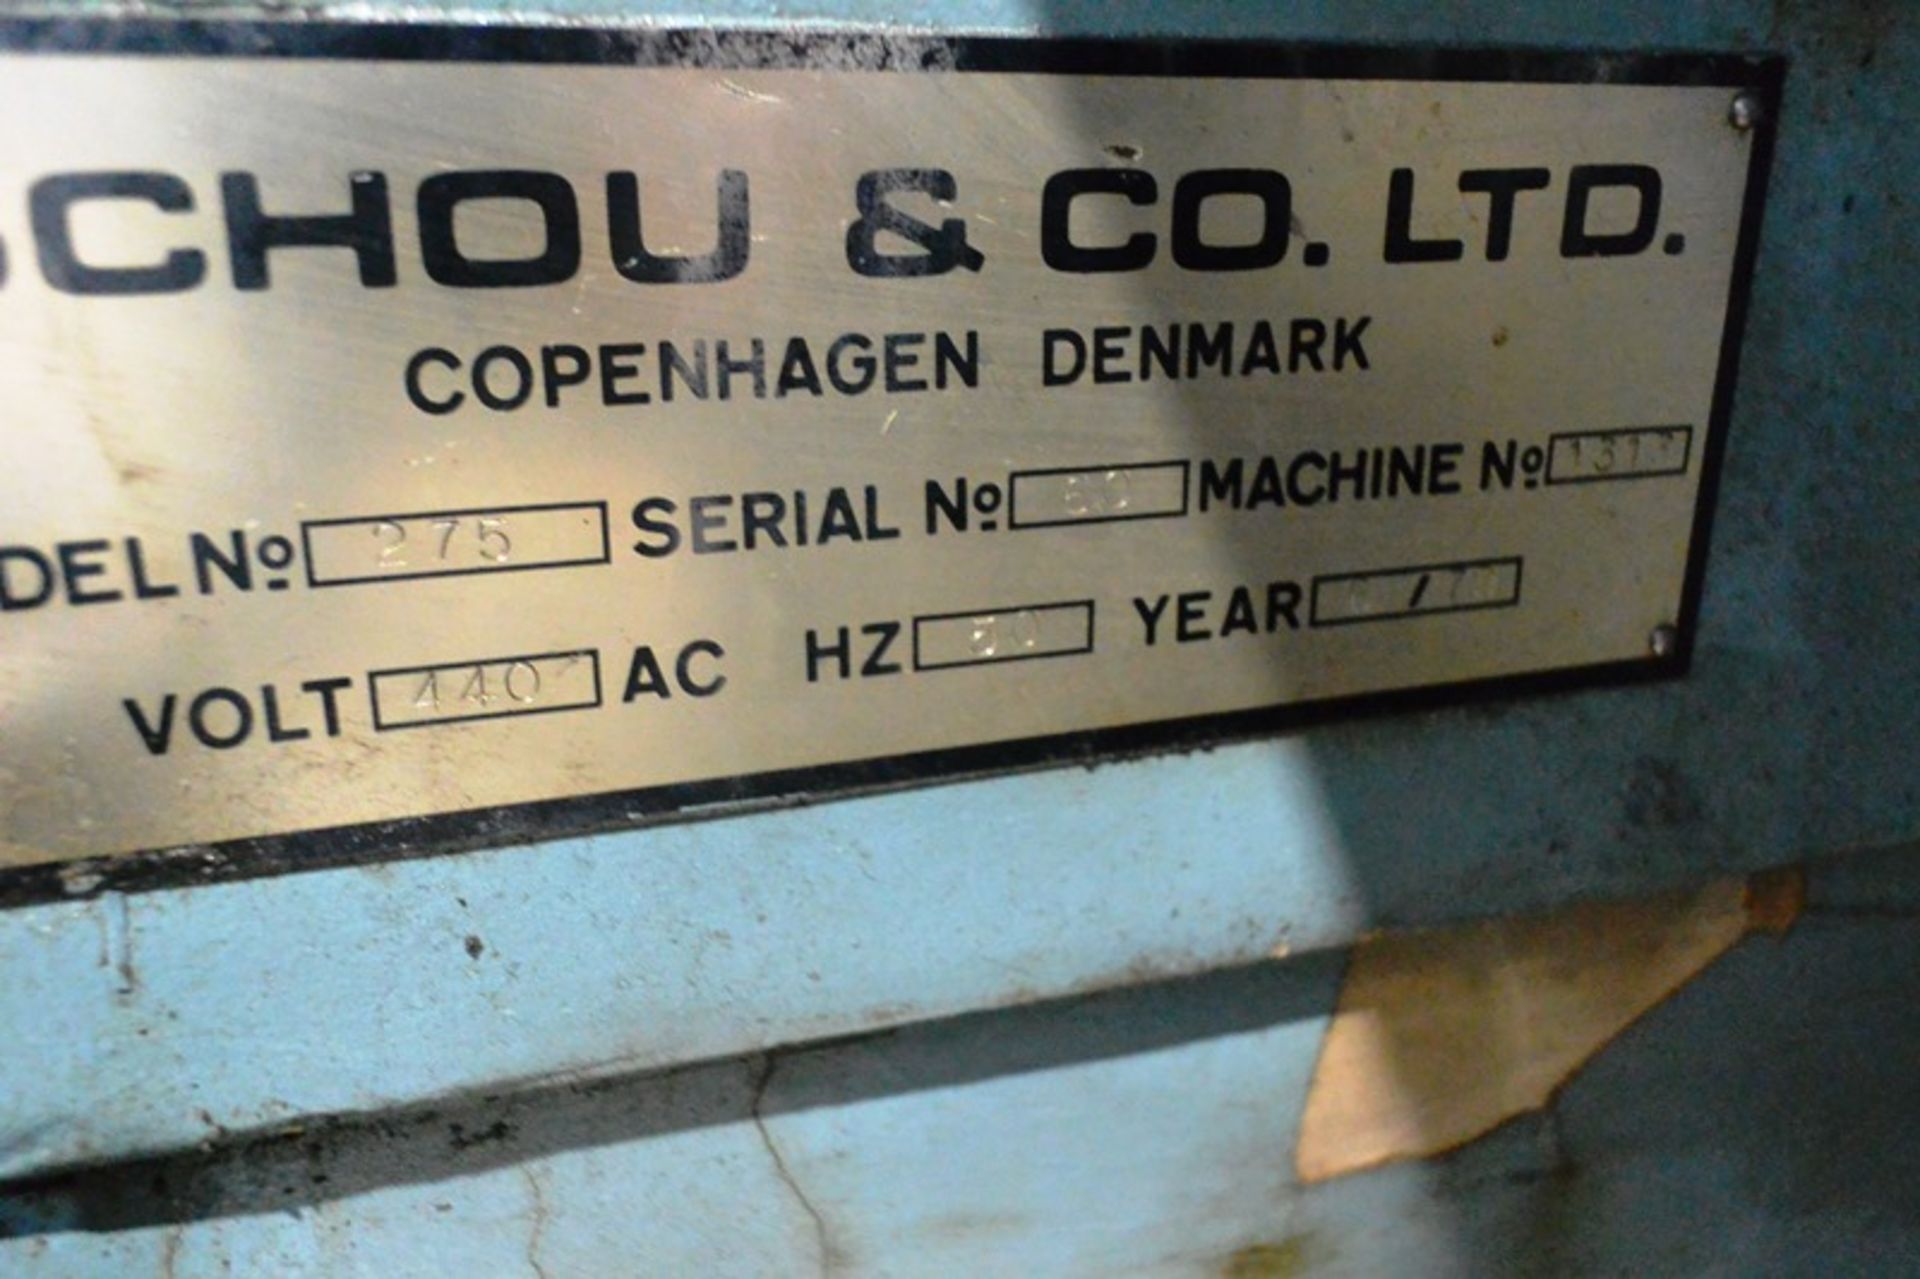 Schou & Co Ltd vertical cylinder block boring machine, model 275, machine no. 1313, serial no. 60 ( - Image 6 of 8